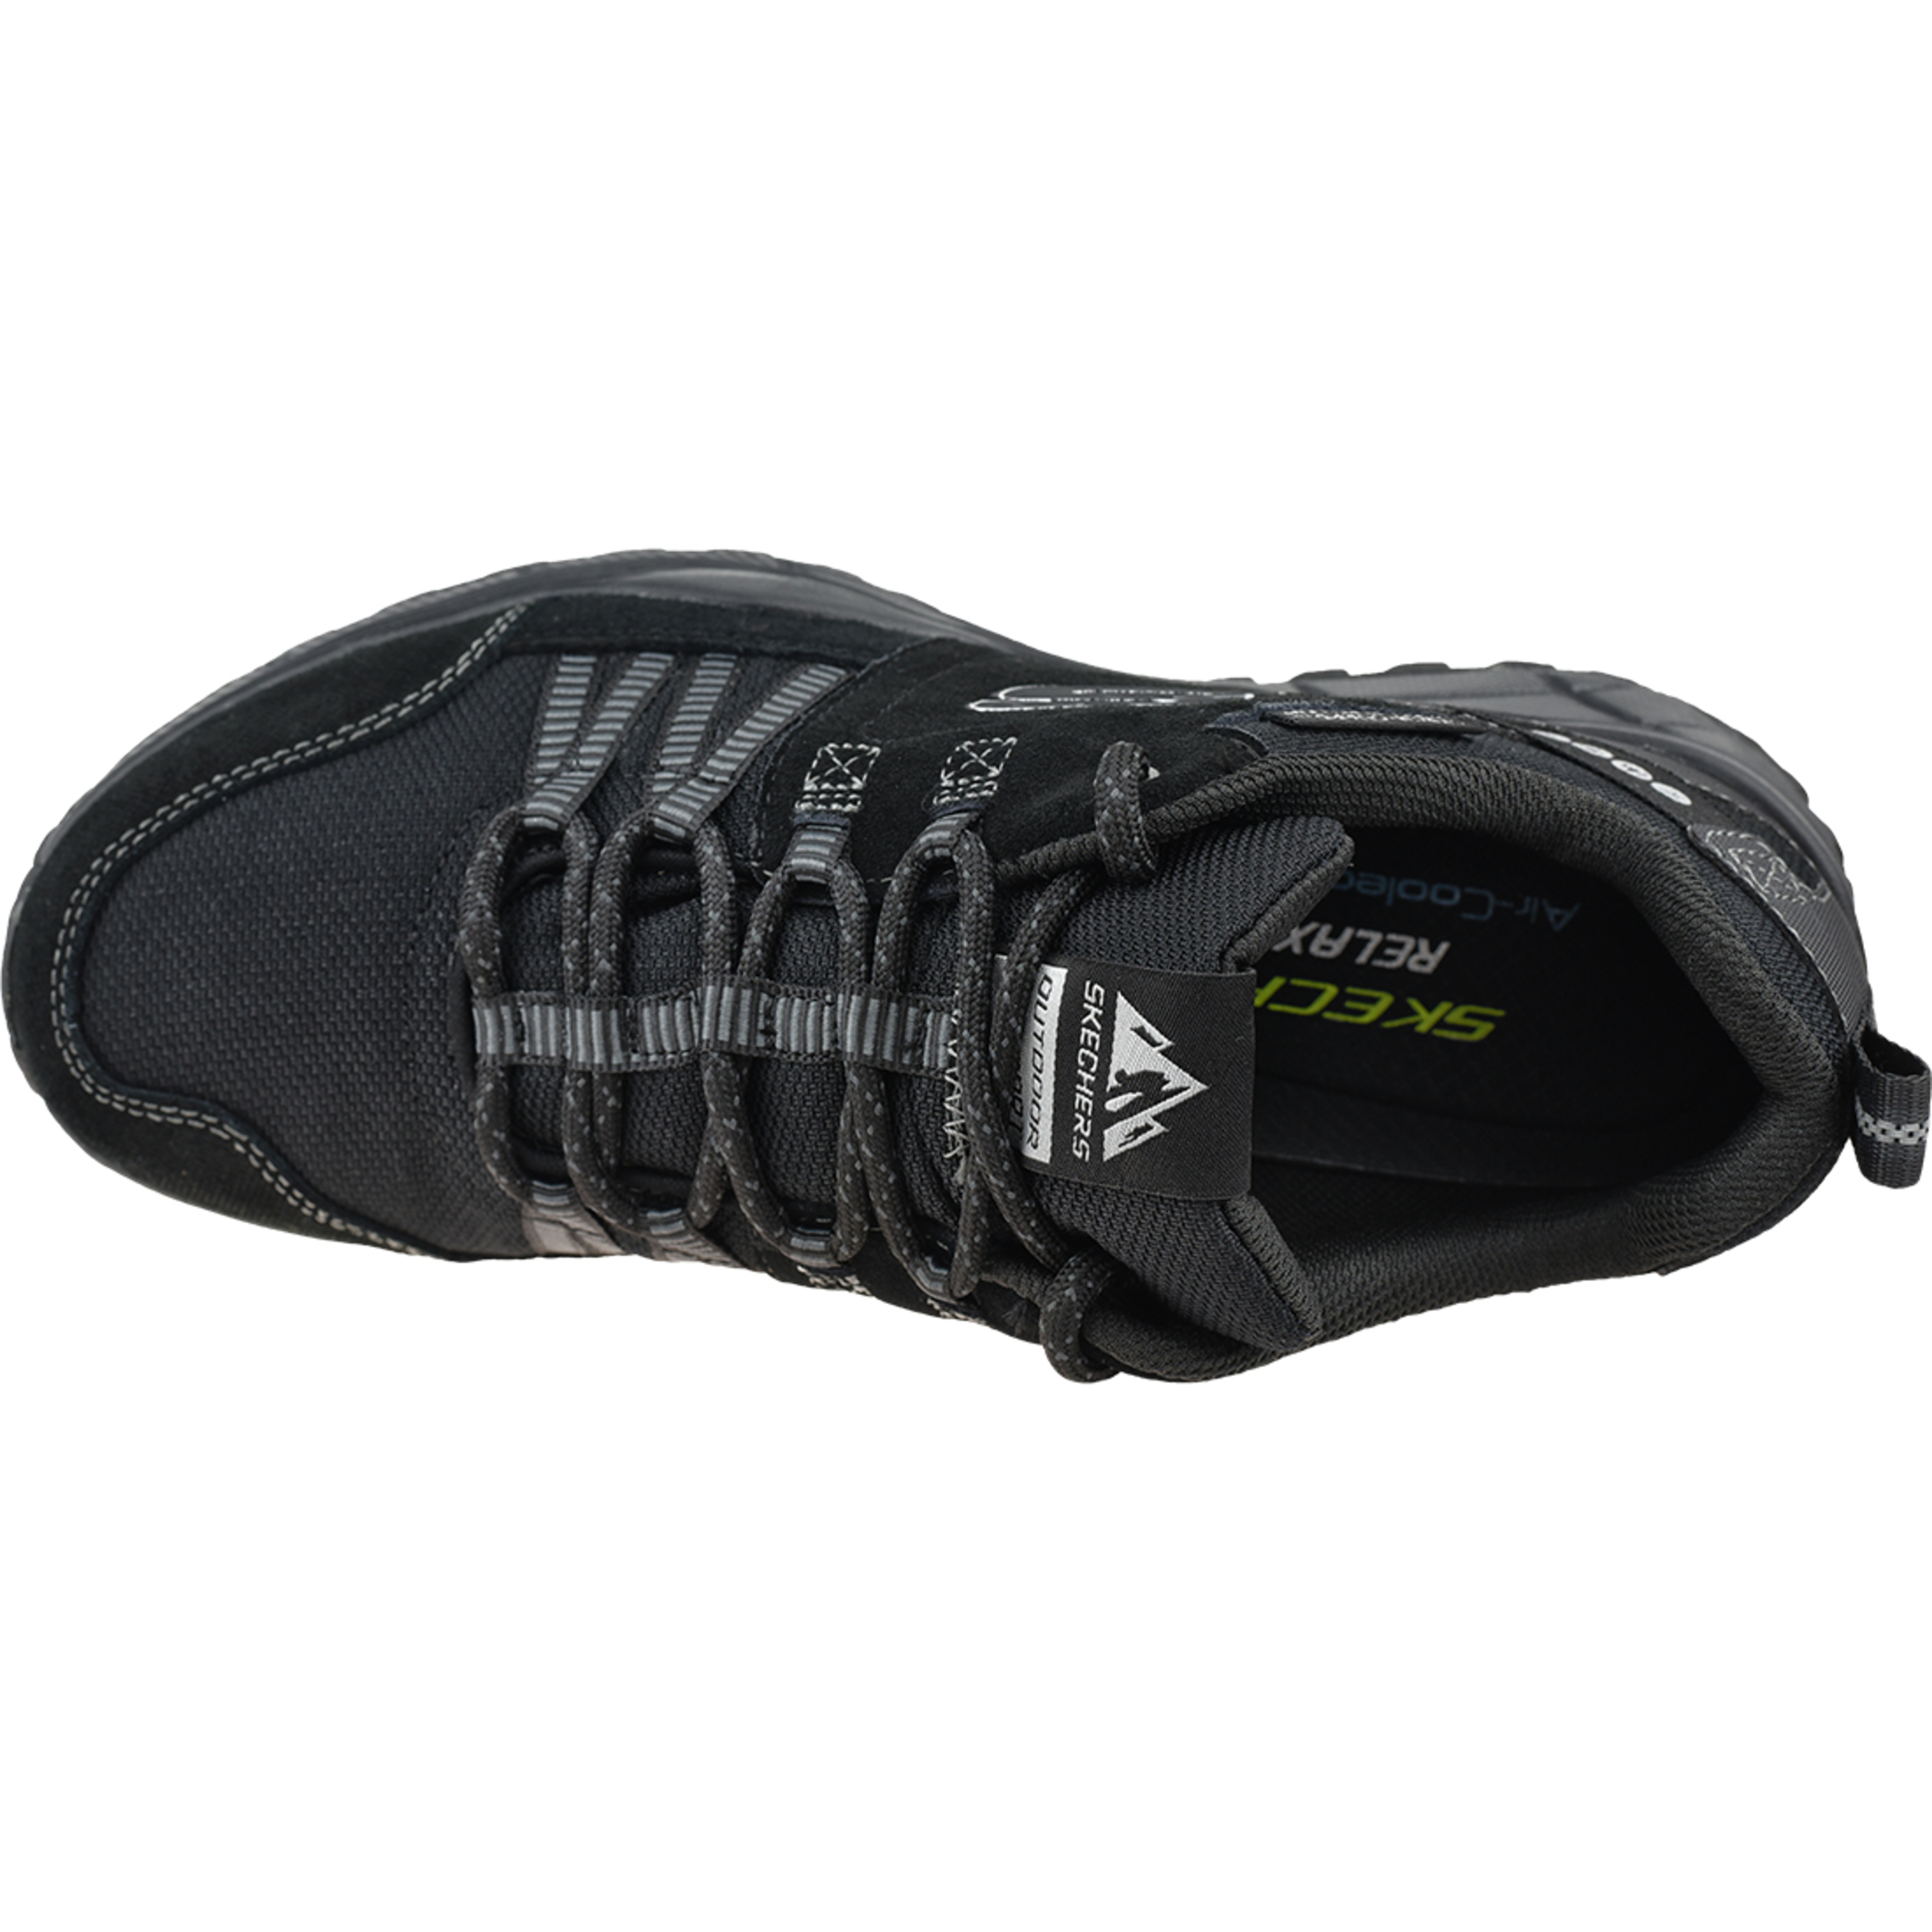 Zapatillas Skechers Equalizer 4.0 Trail 237023-bbk